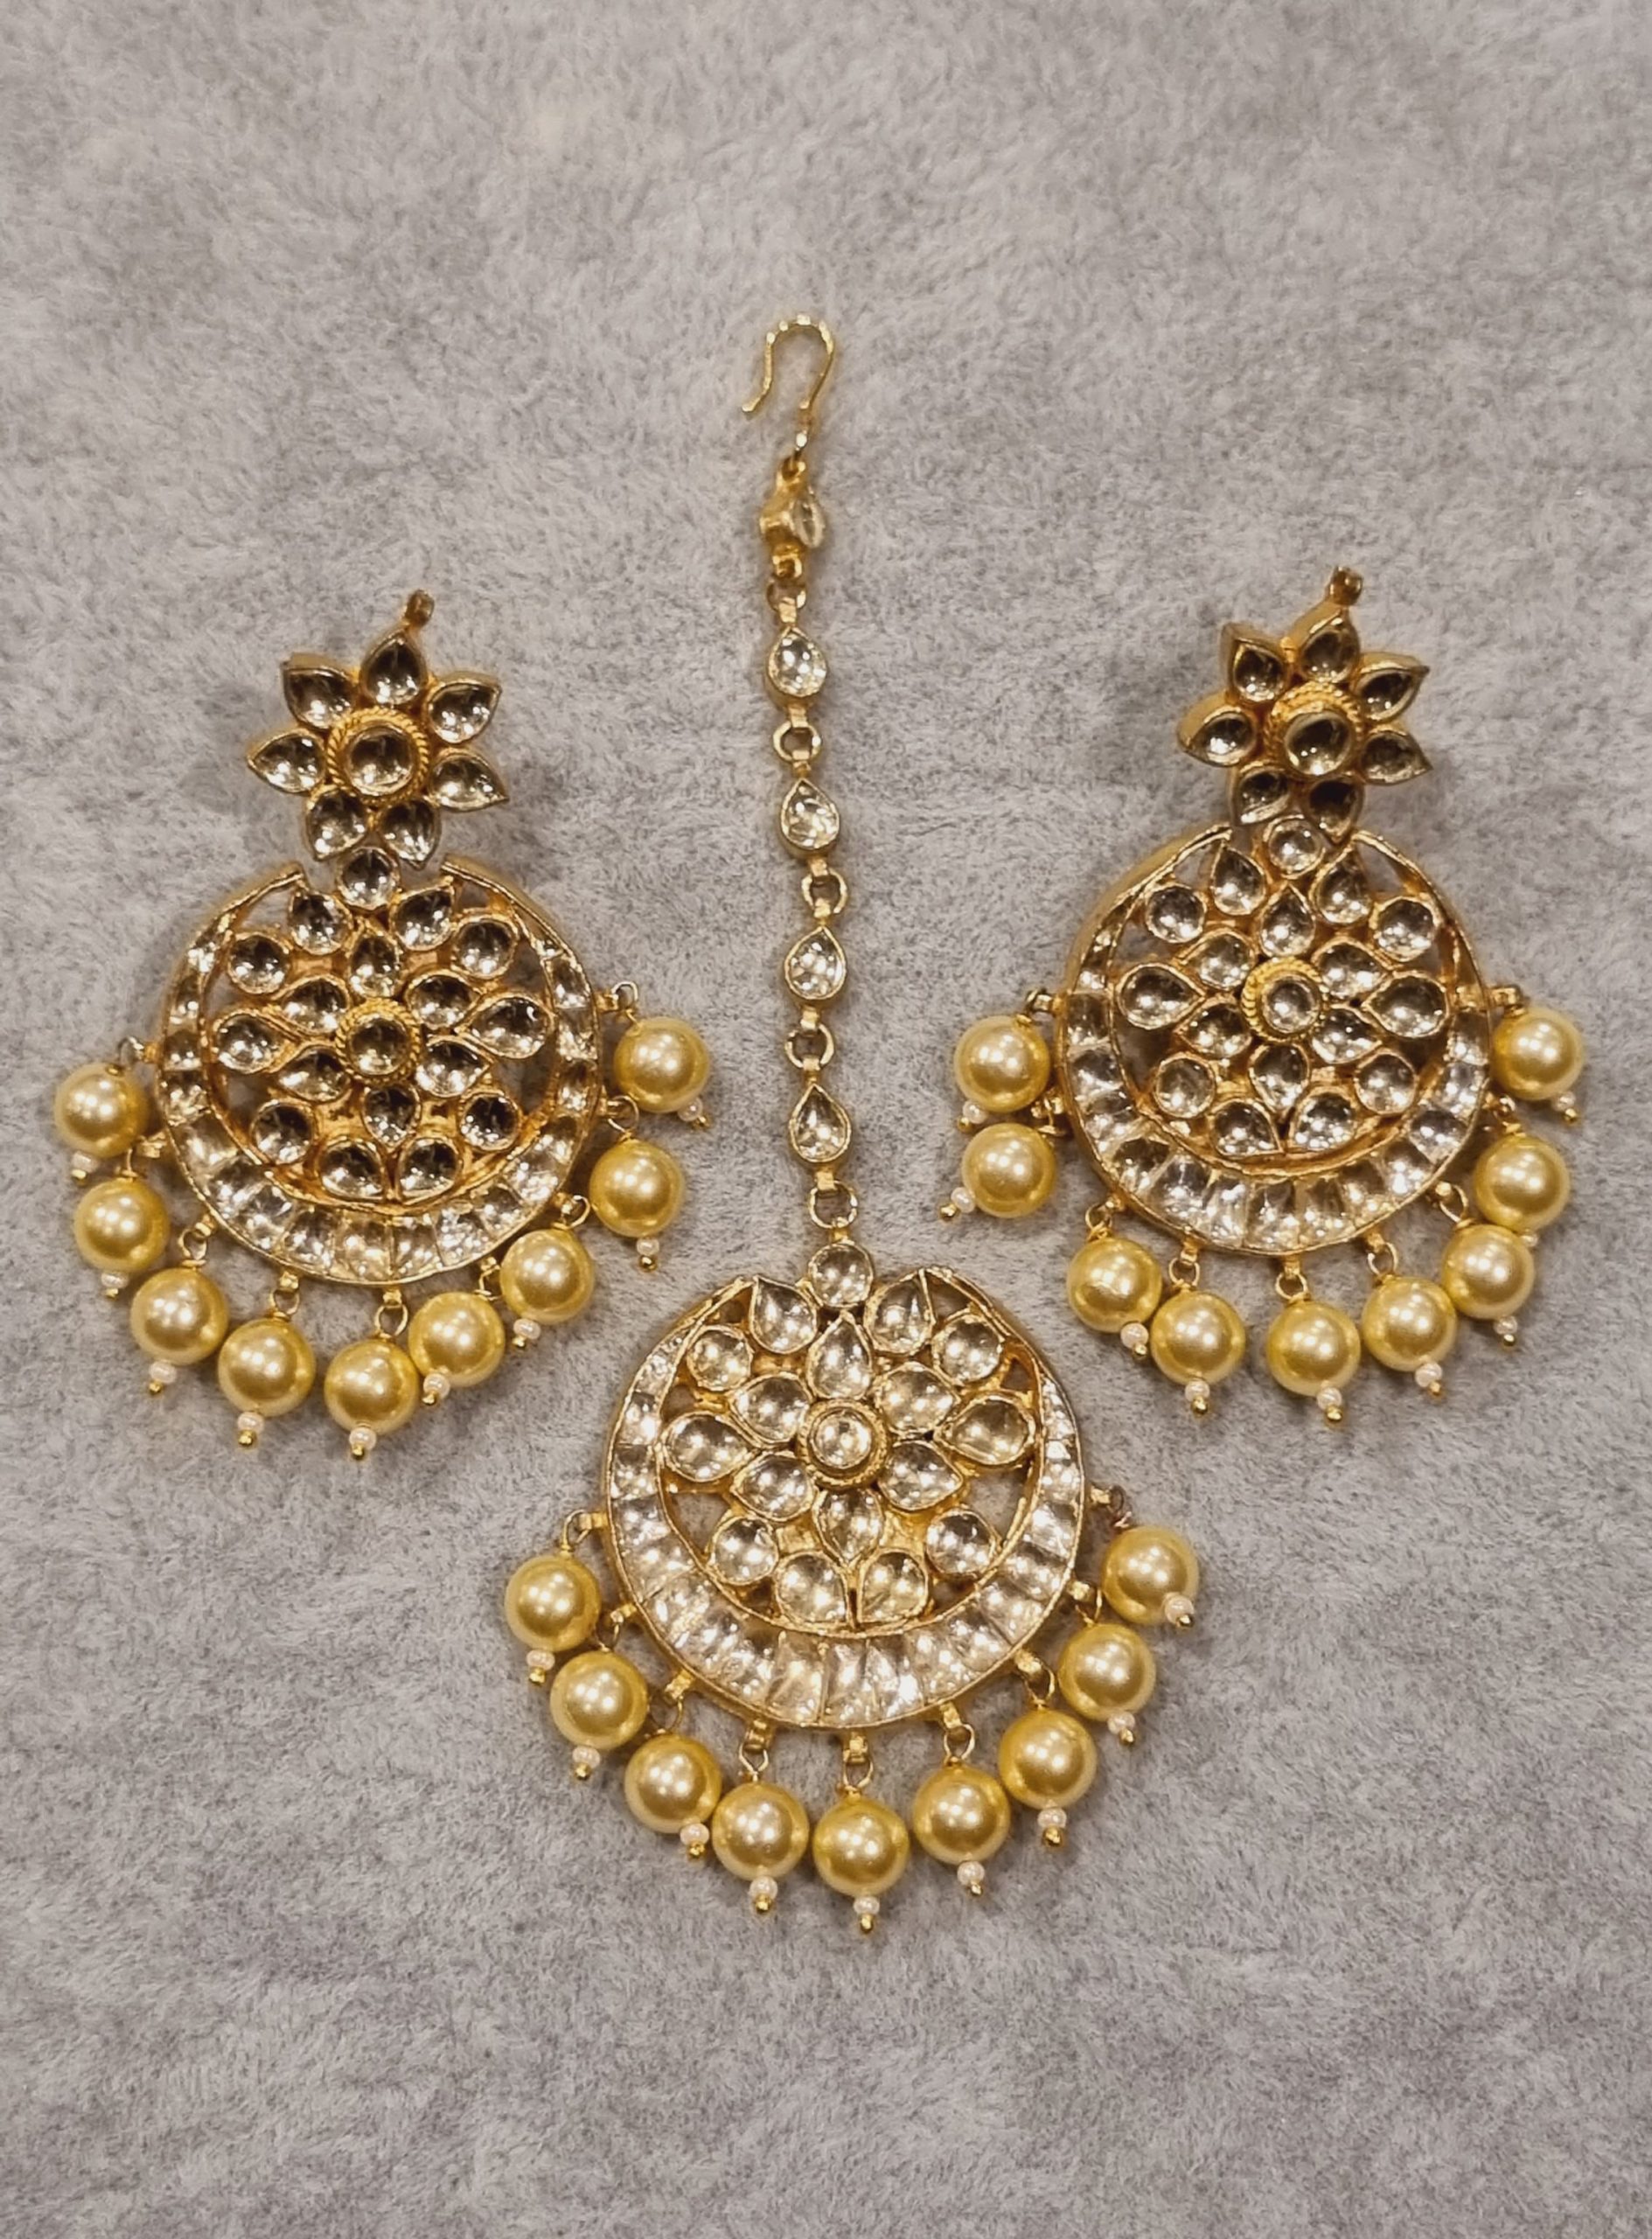 kundan earrings and tikka set